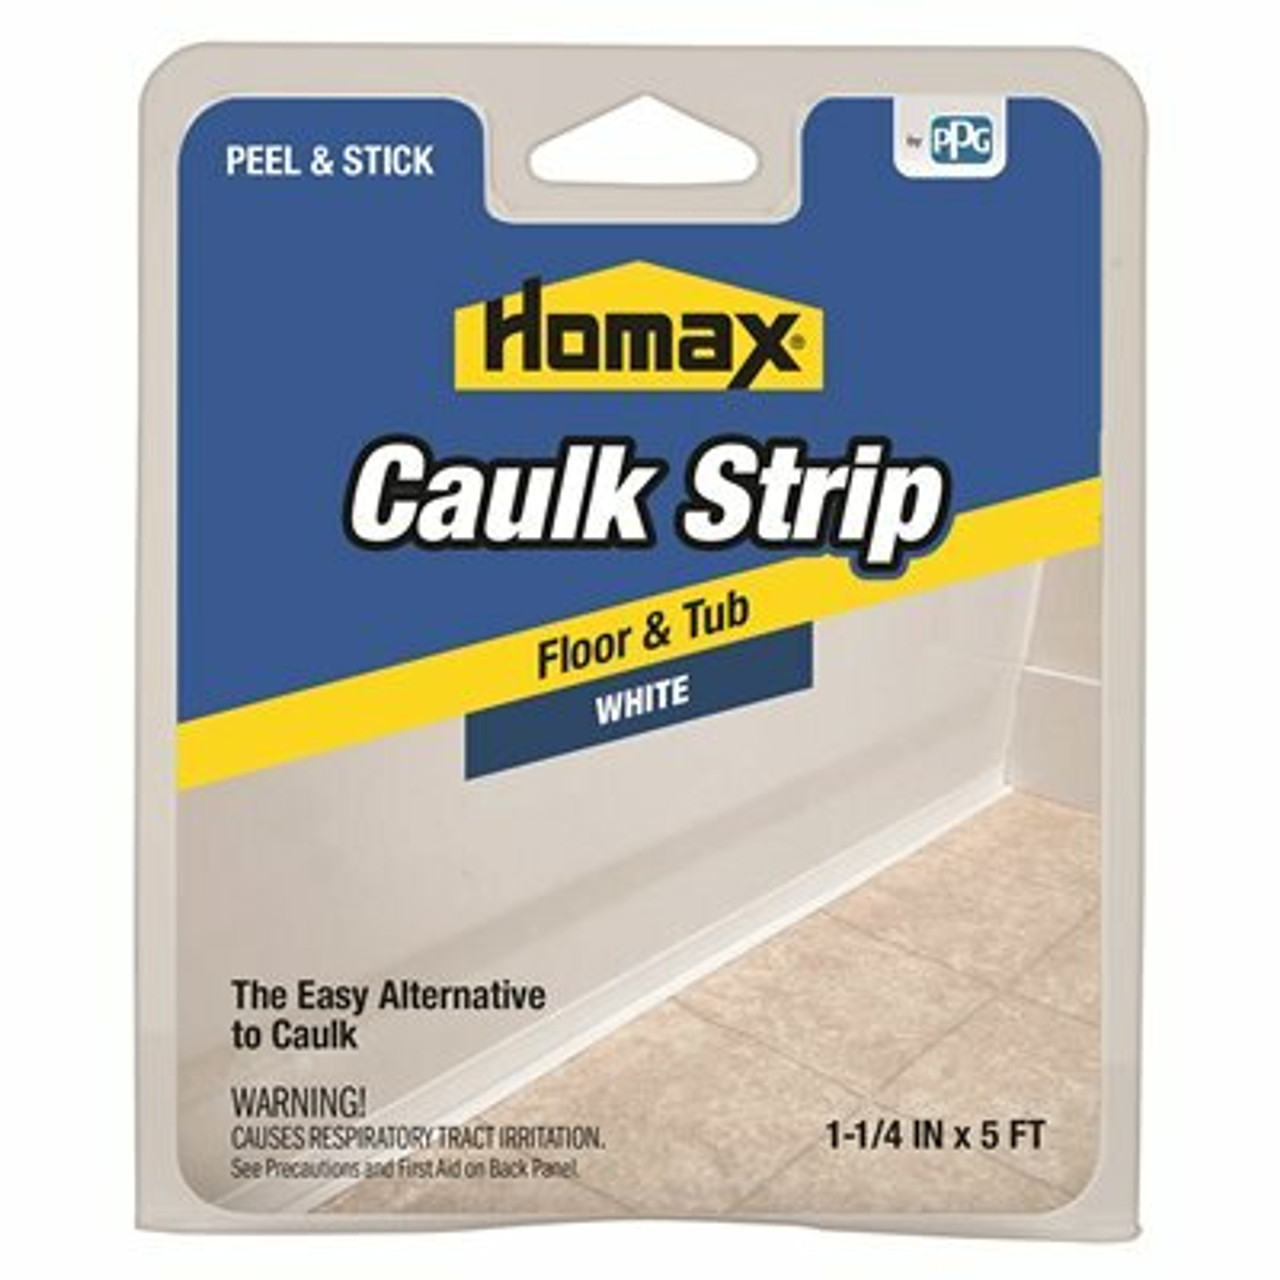 Homax 1-1/4 in. X 5 Ft. Tub And Floor Caulk Strip White